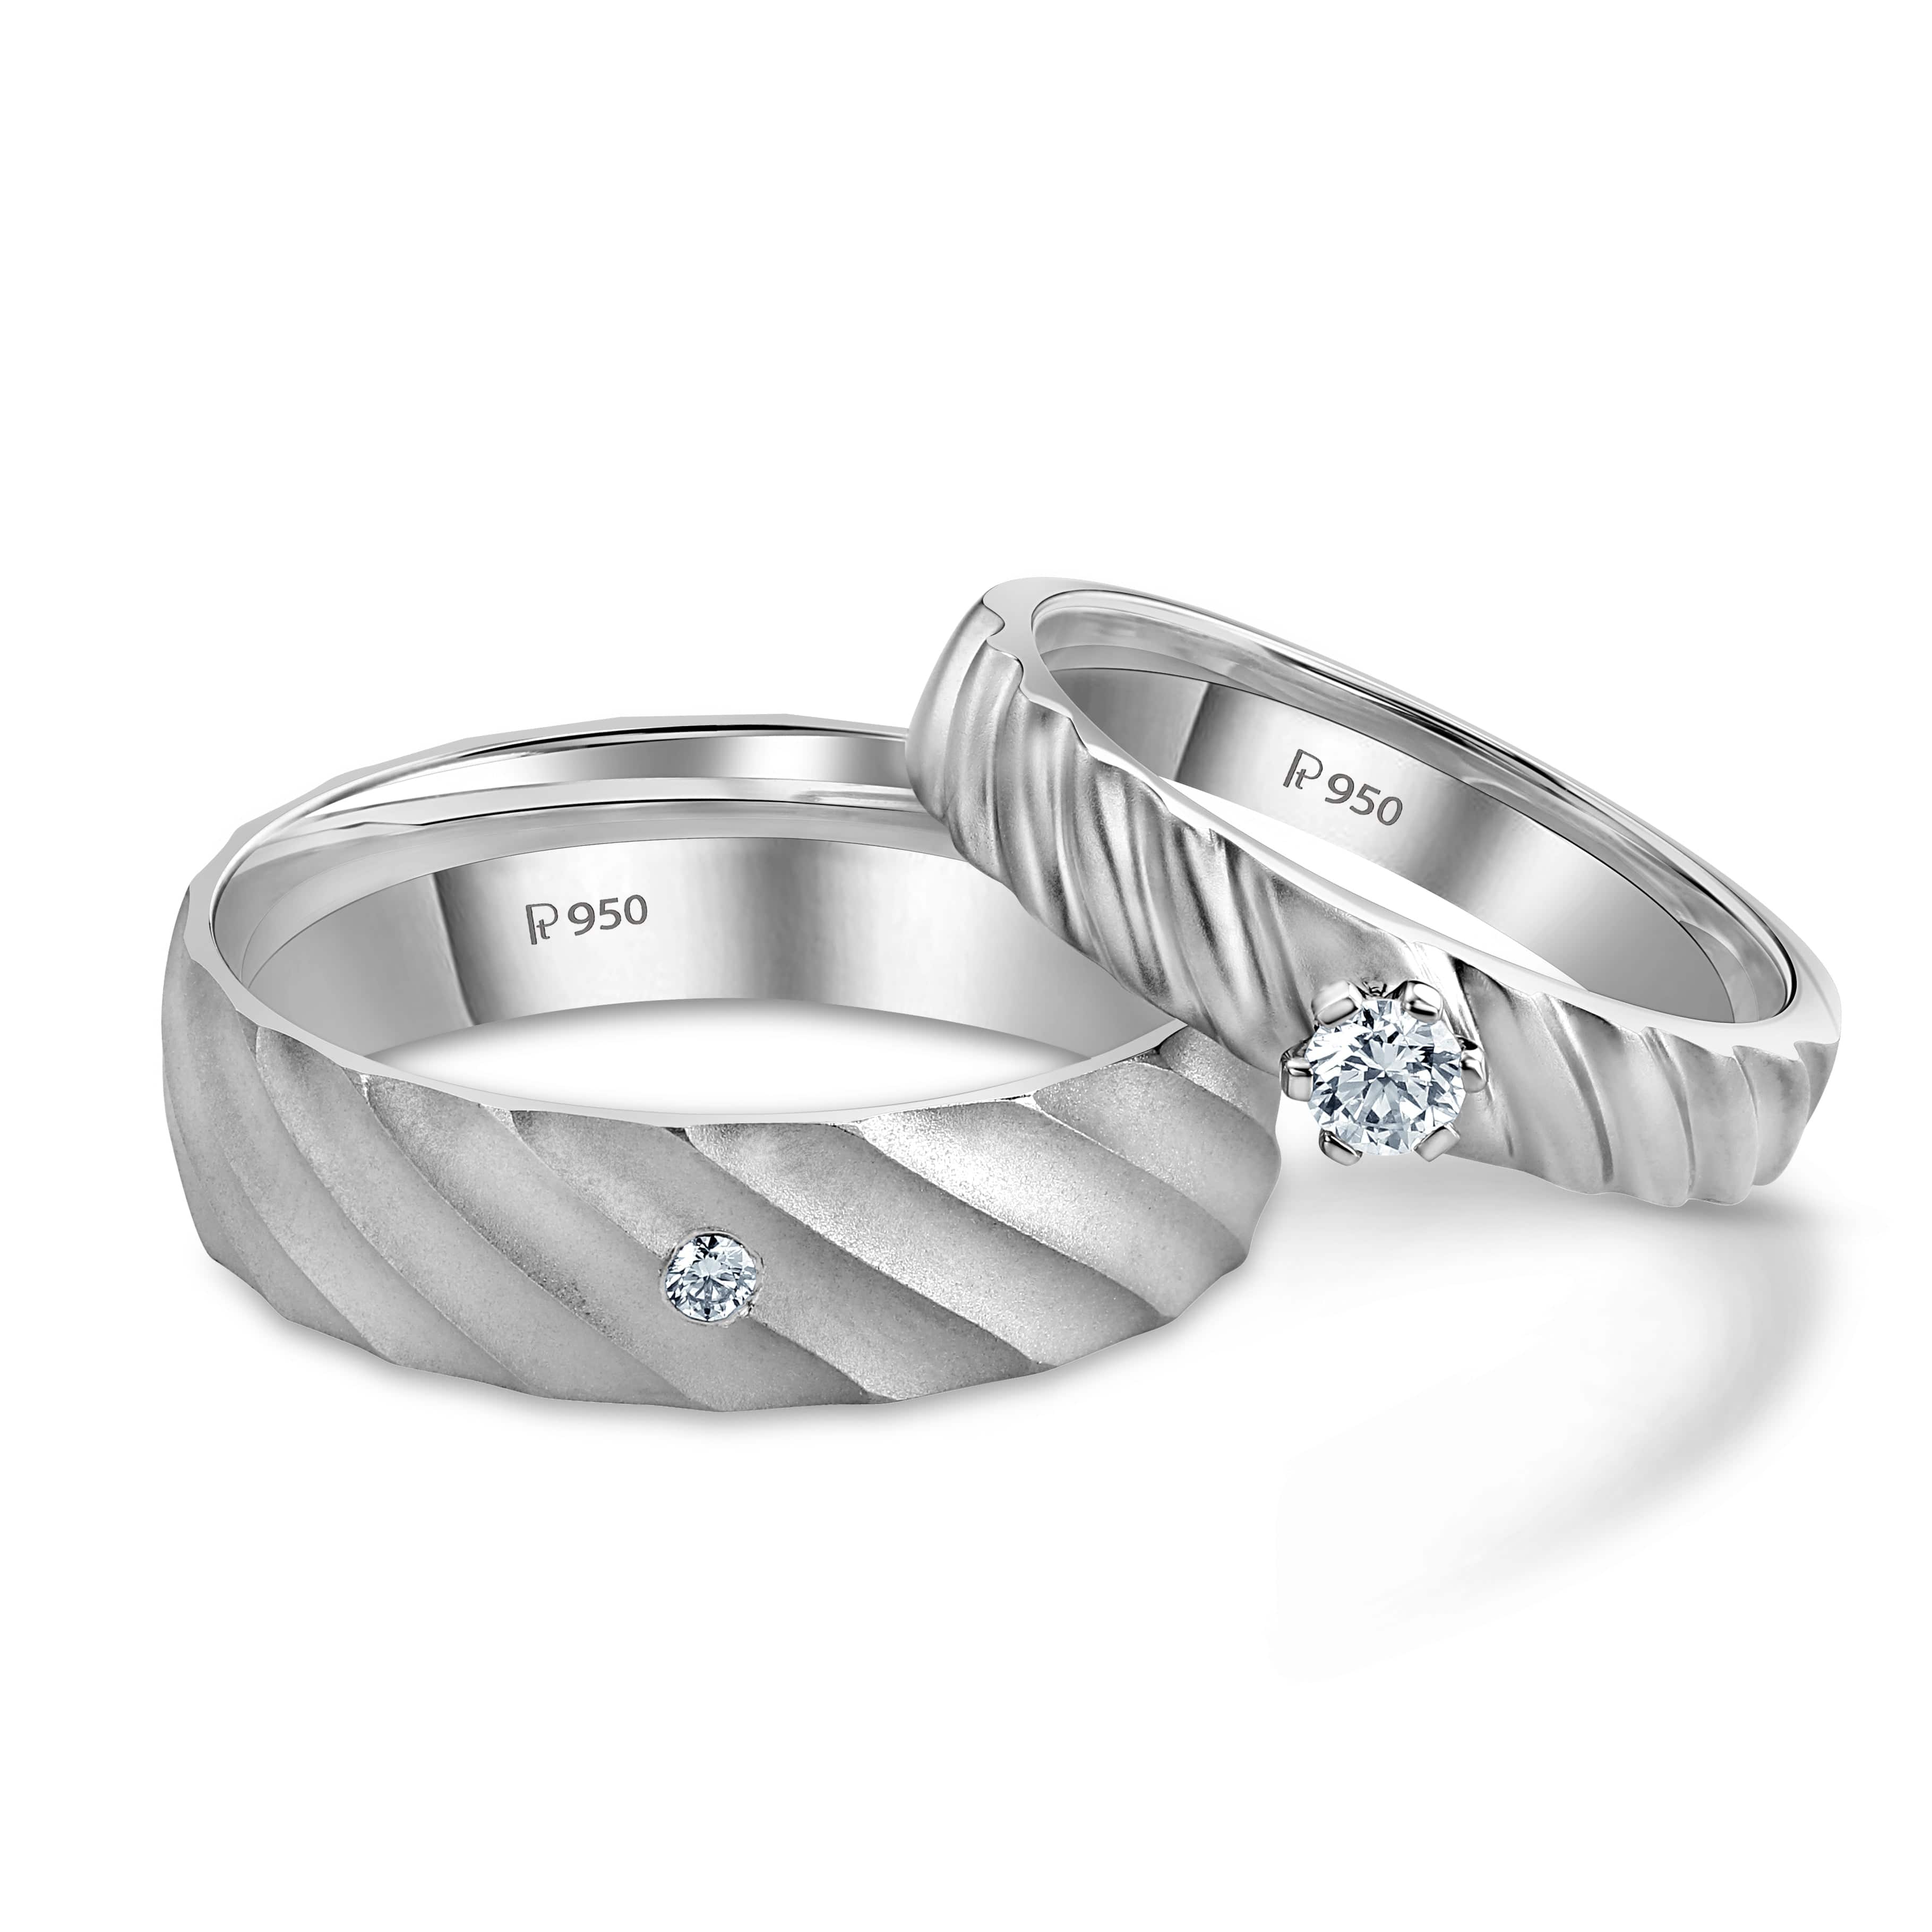 Original Design Creative Simple Handmade Silver Couple Rings - Couple Rings